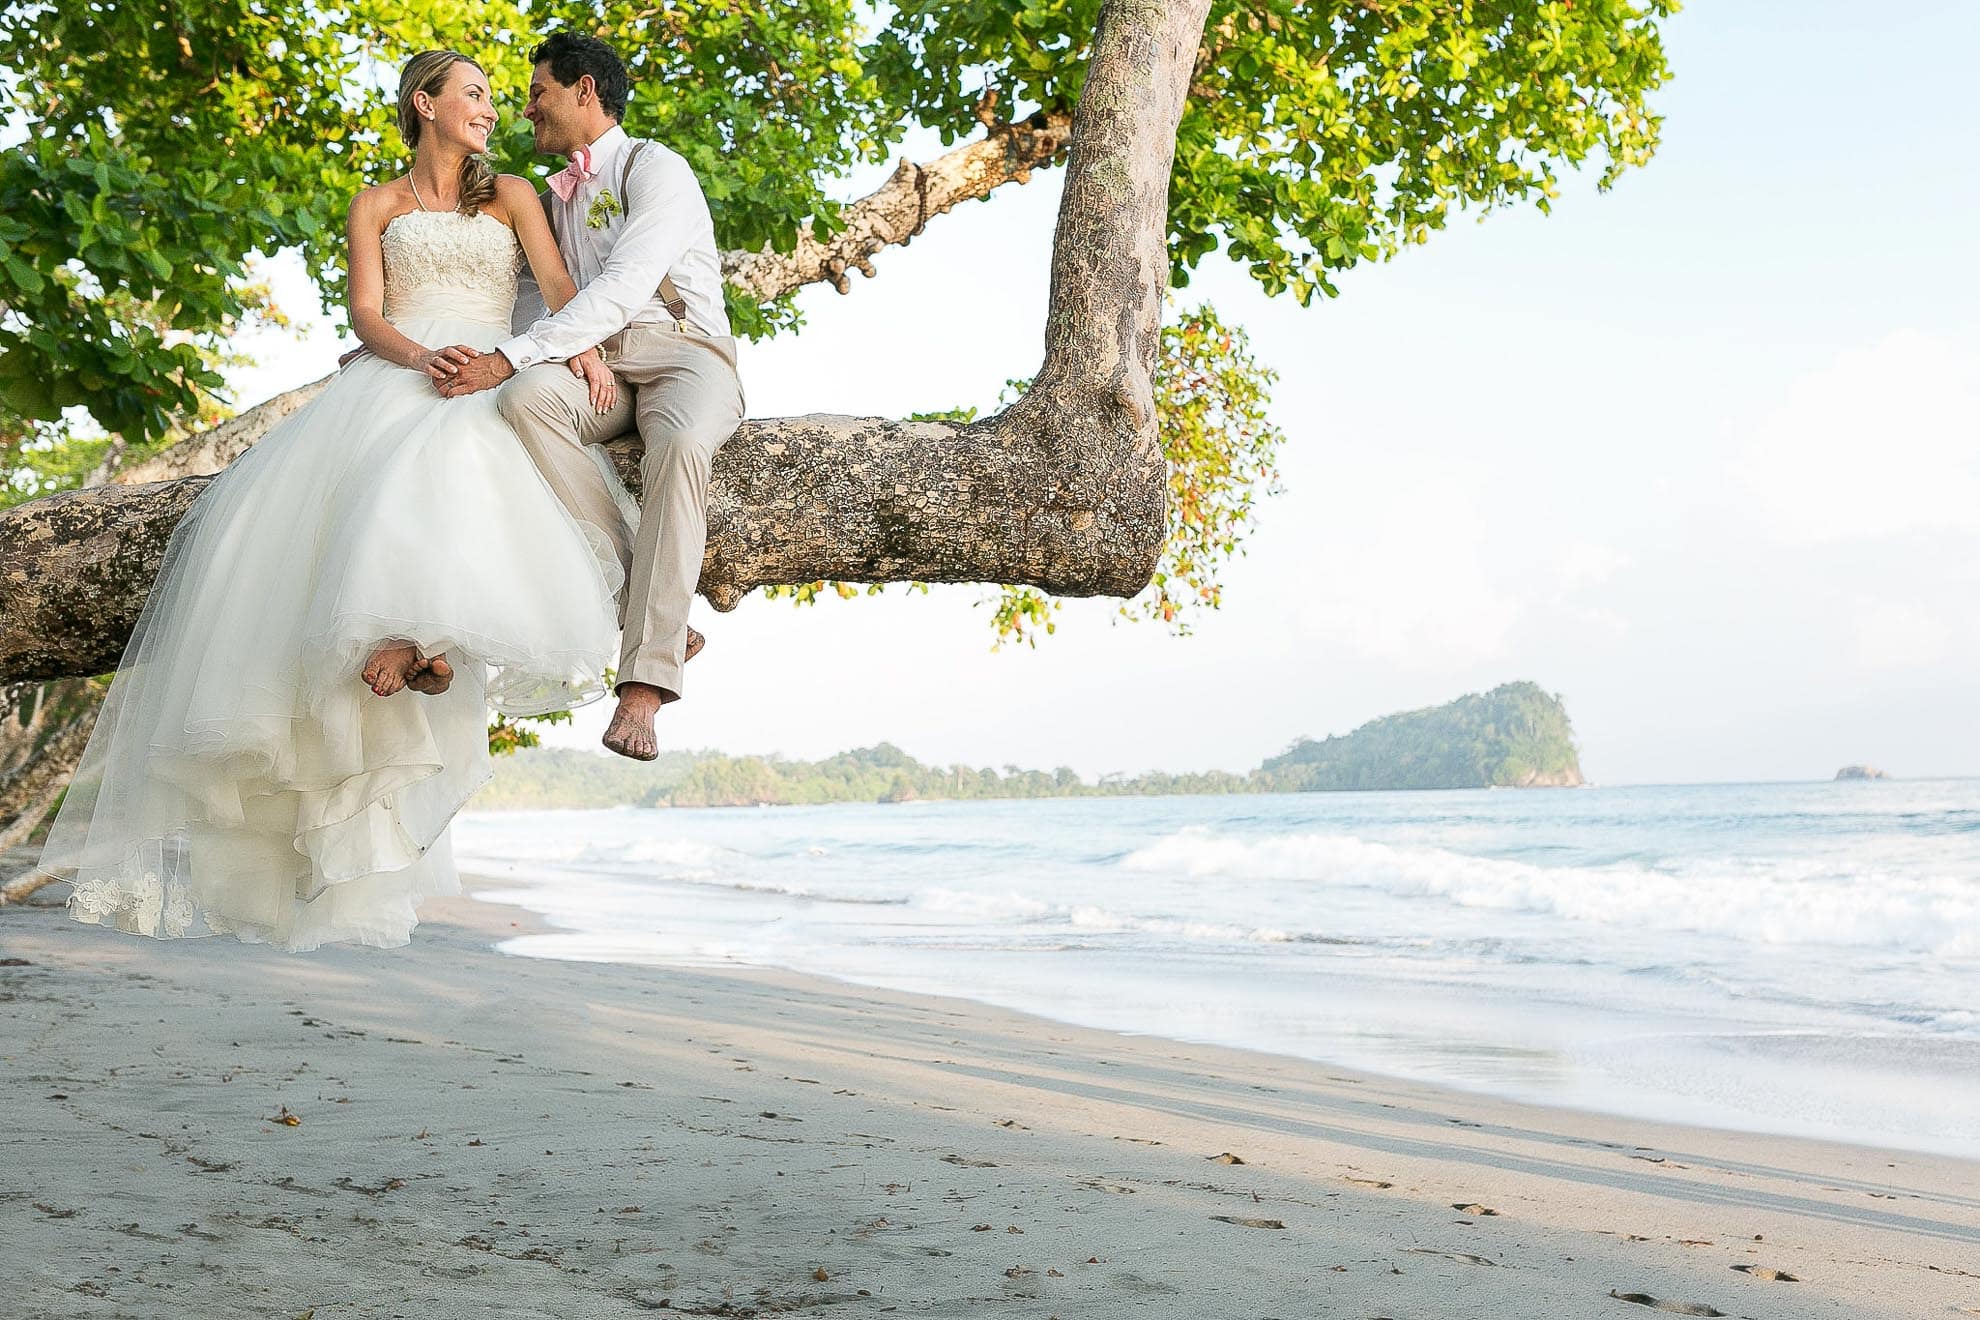 Wedding portraits in Costa Rica.